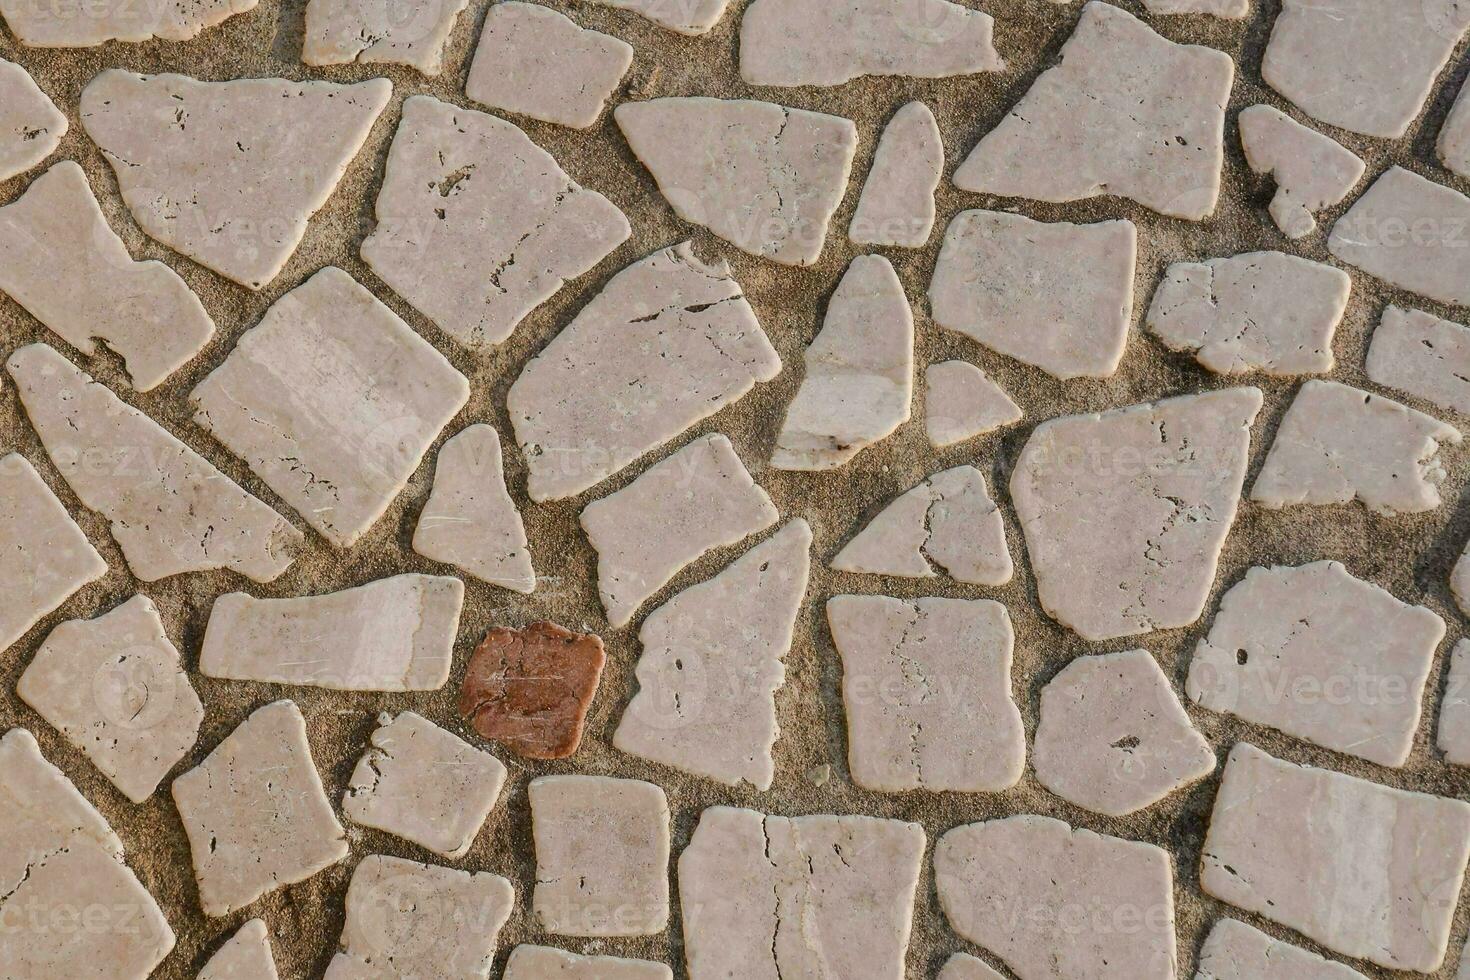 Rocks texture close-up photo